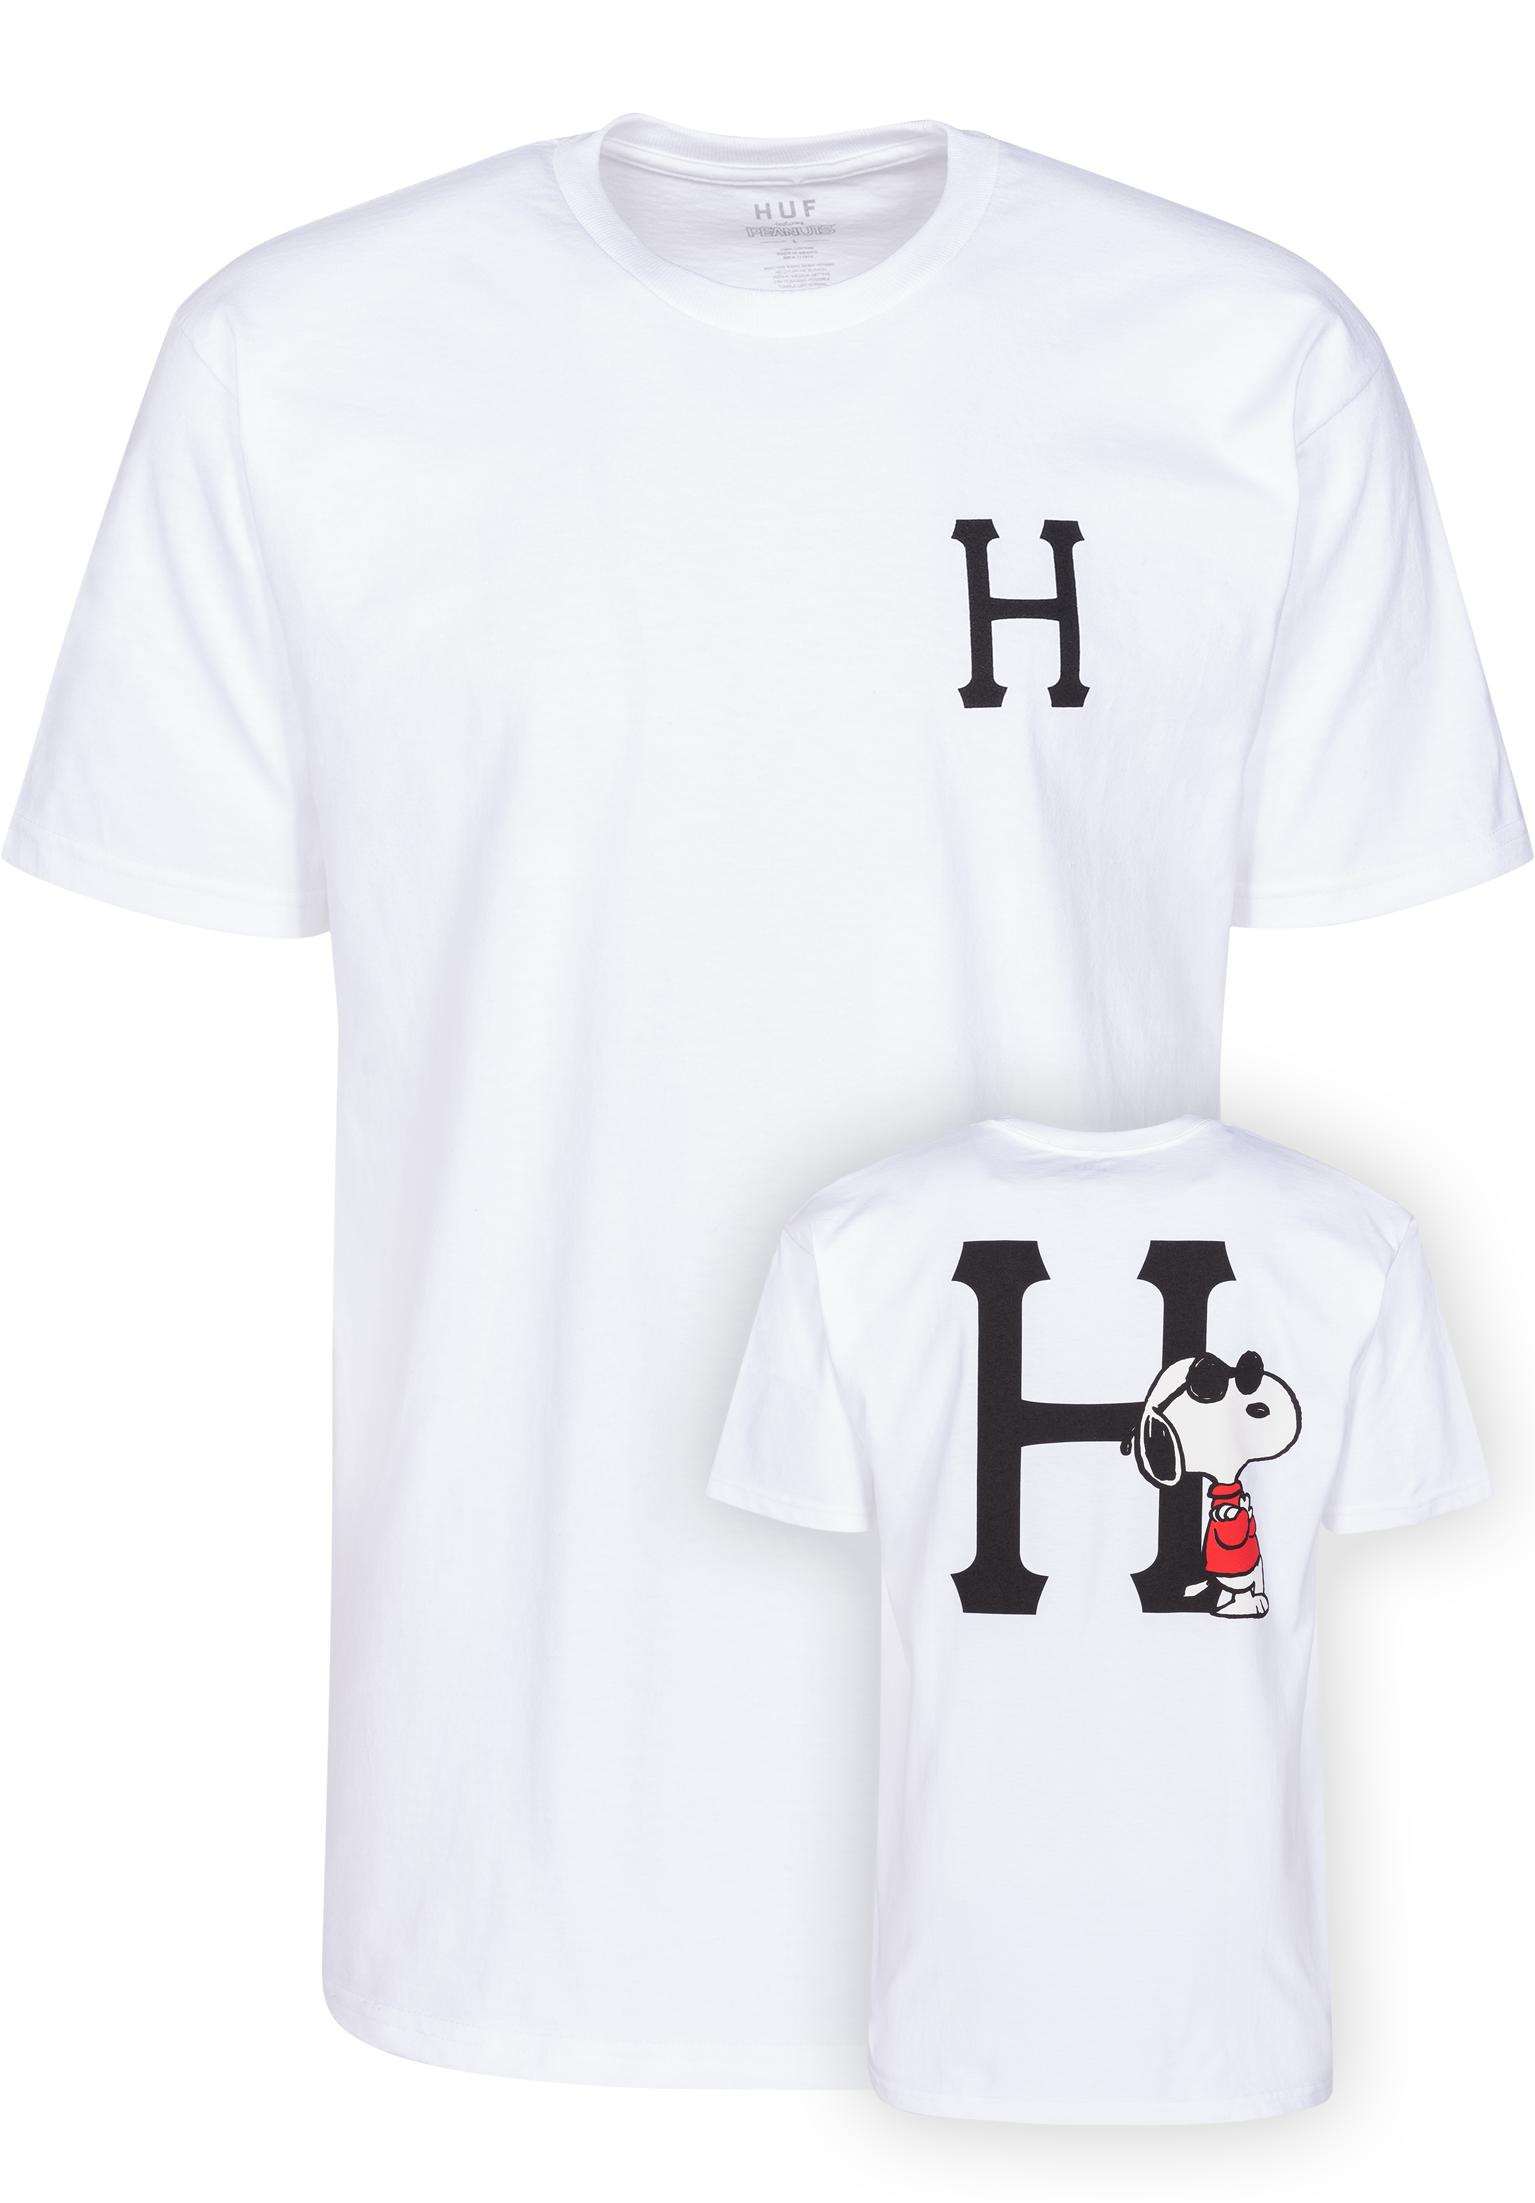 Titus_Aachen_huf-t-shirts-x-peanuts-joe-cool-classic-h-white-vorderansicht-0399006.jpg